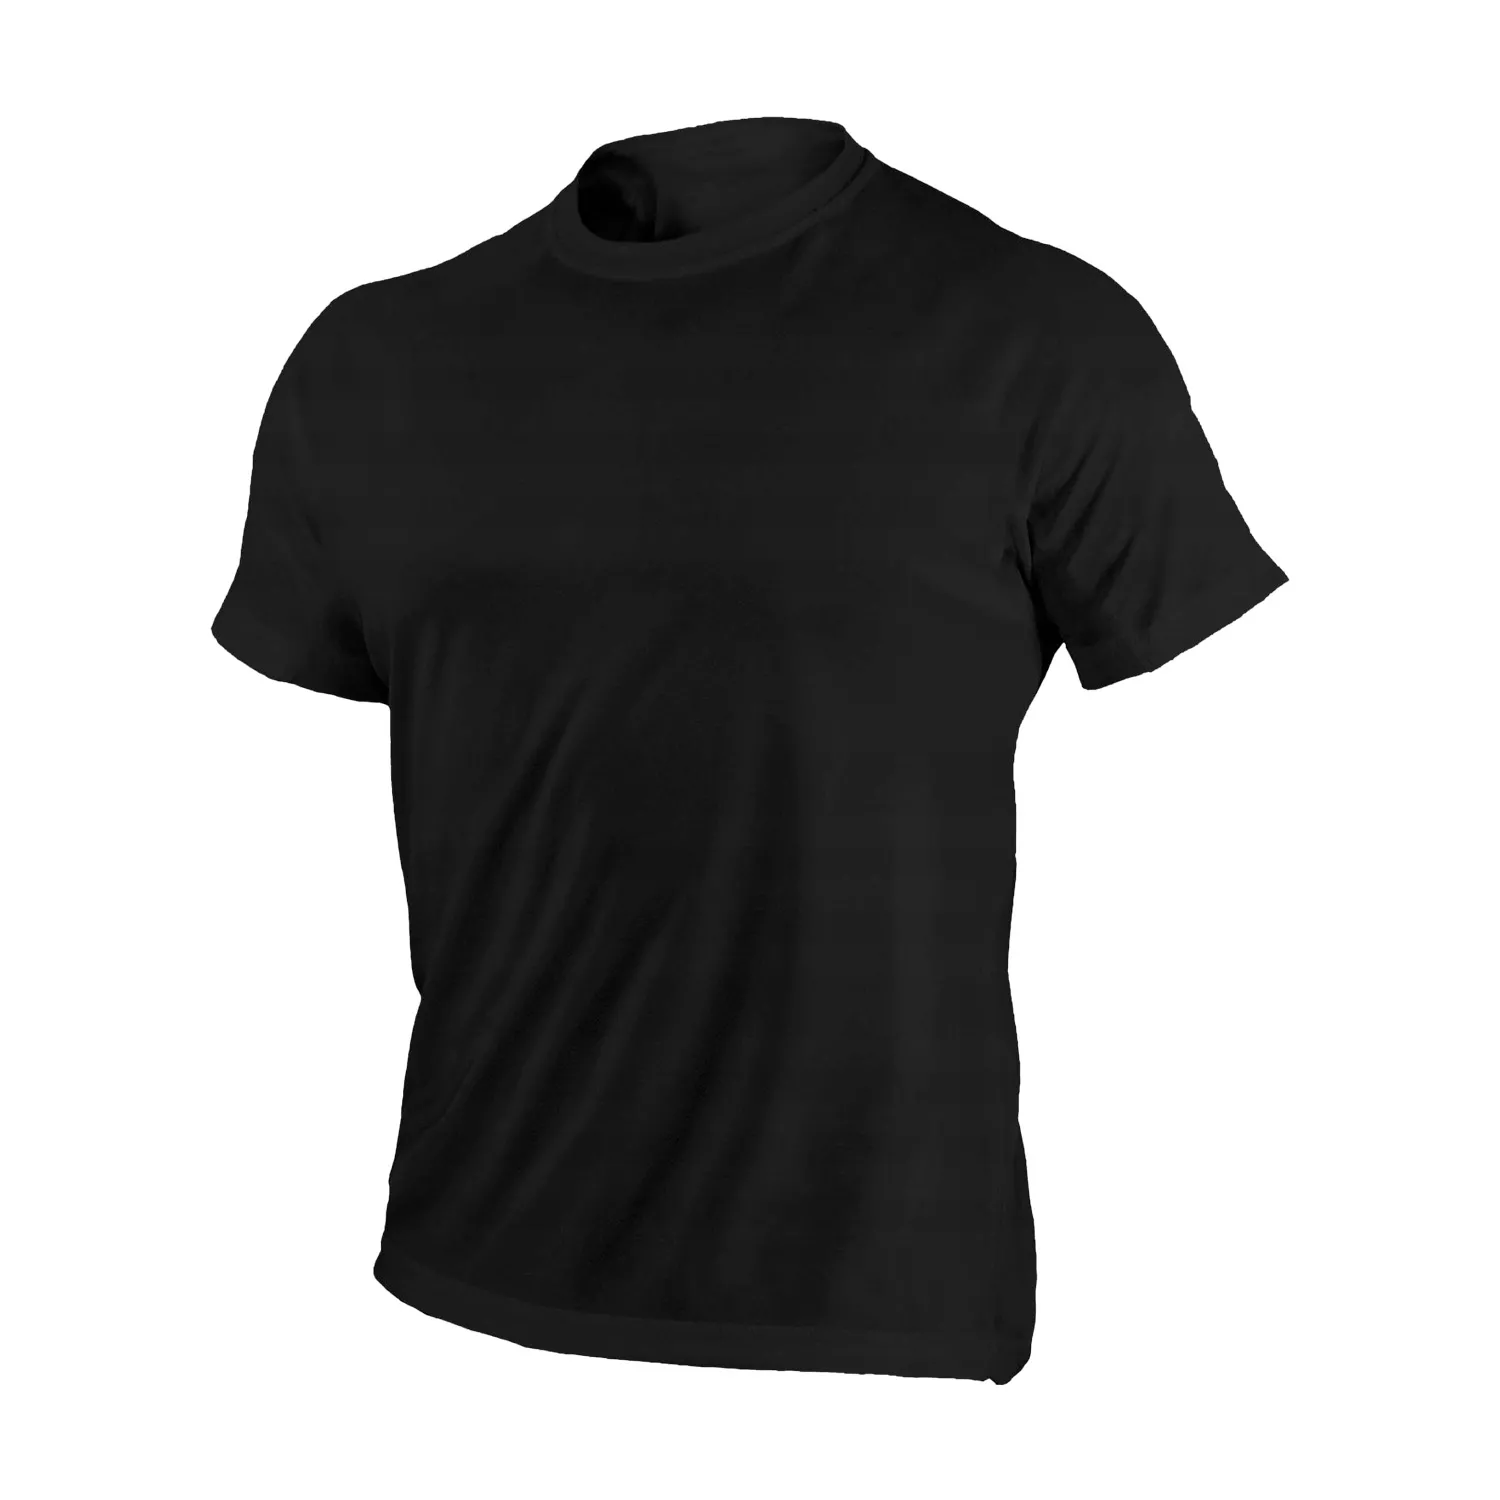 Koszulka T-shirt Bono czarna rozmiar S 